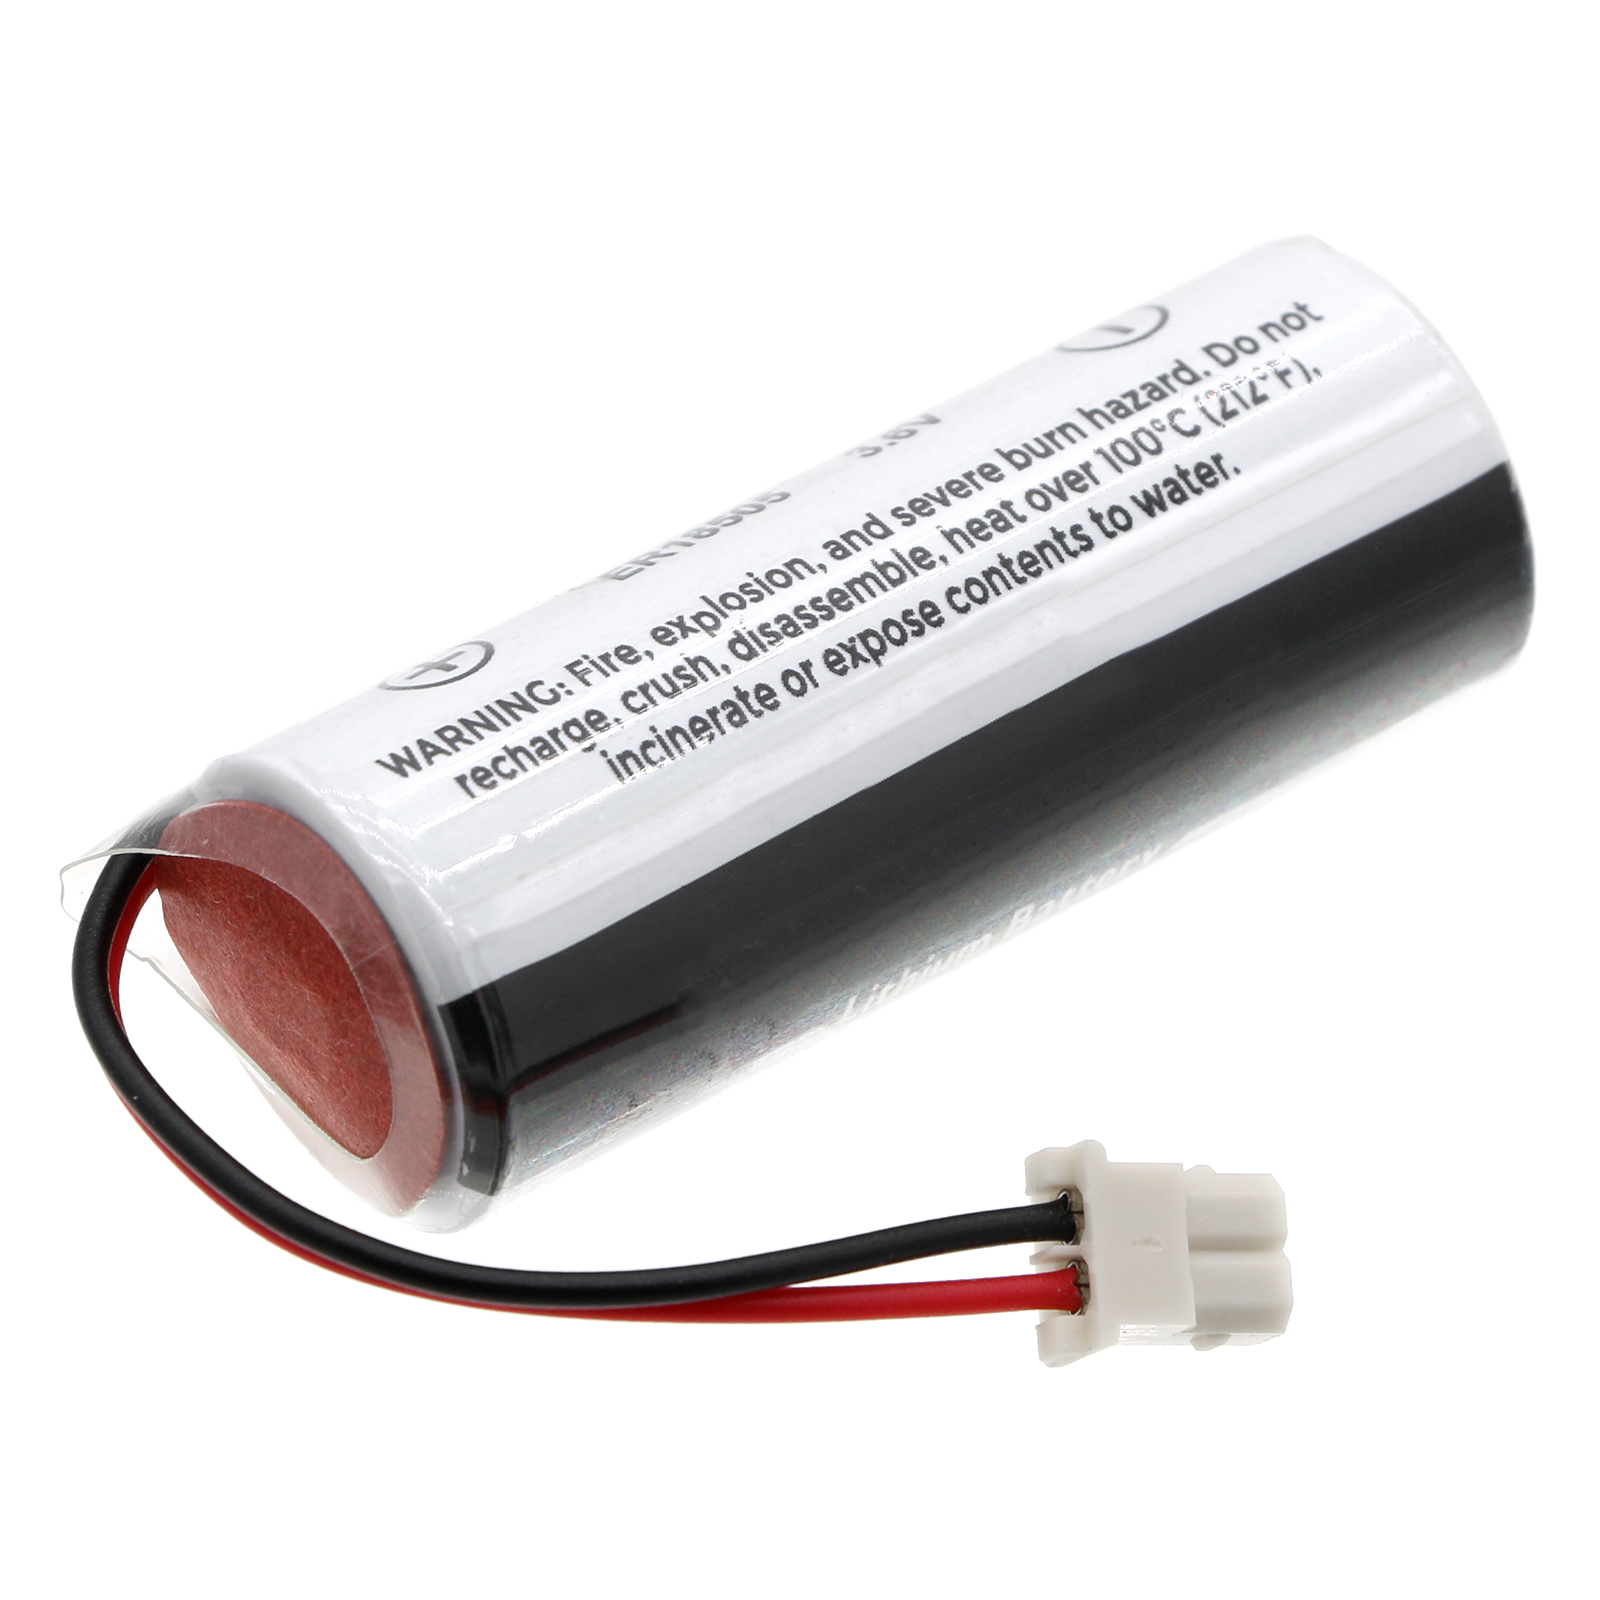 Batteries for ADTAlarm System